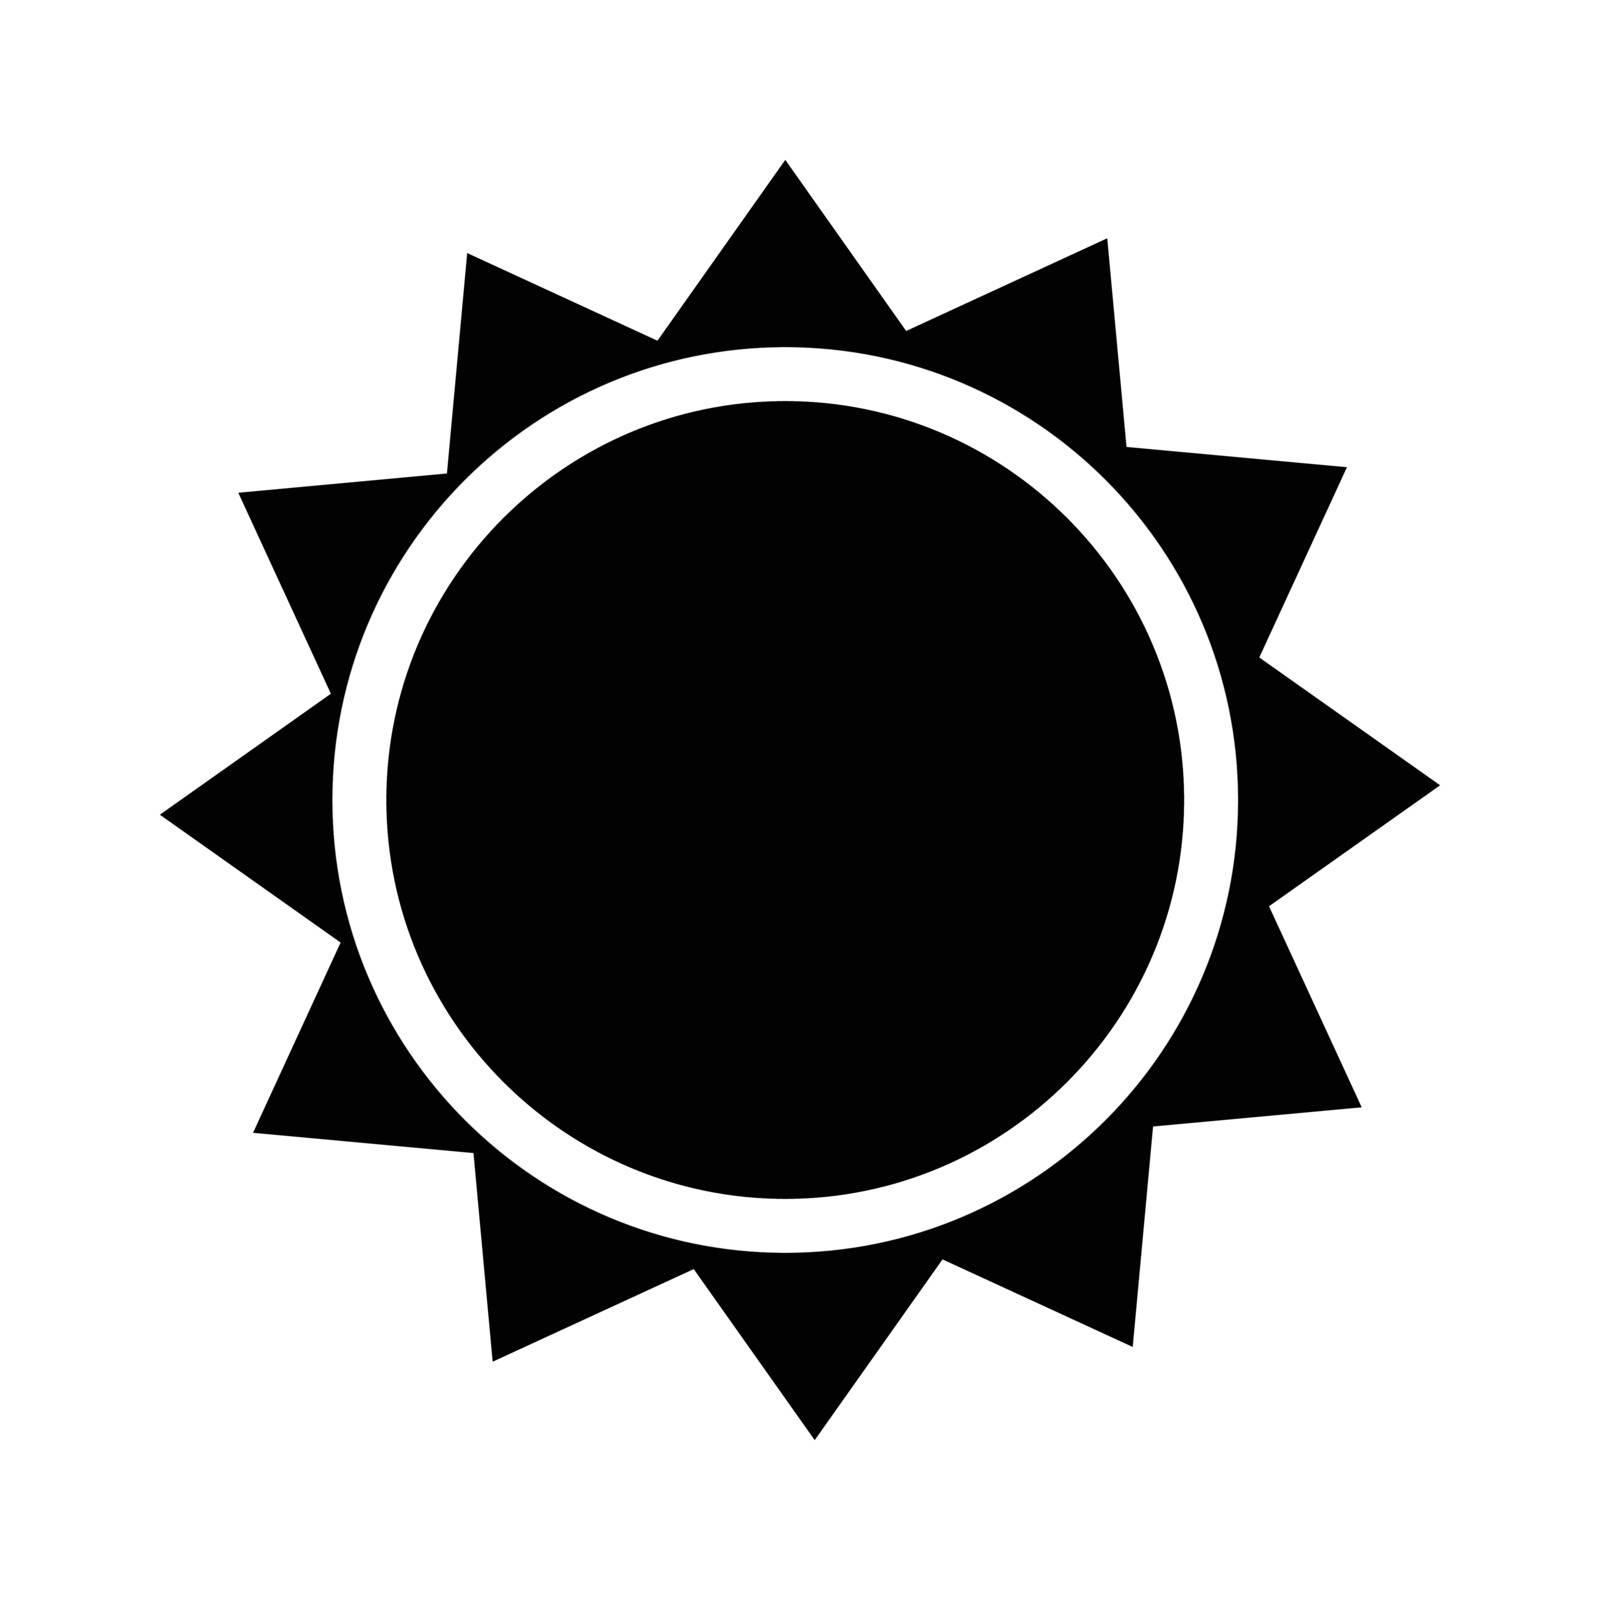 Sun icon - vector iconic design by solargaria